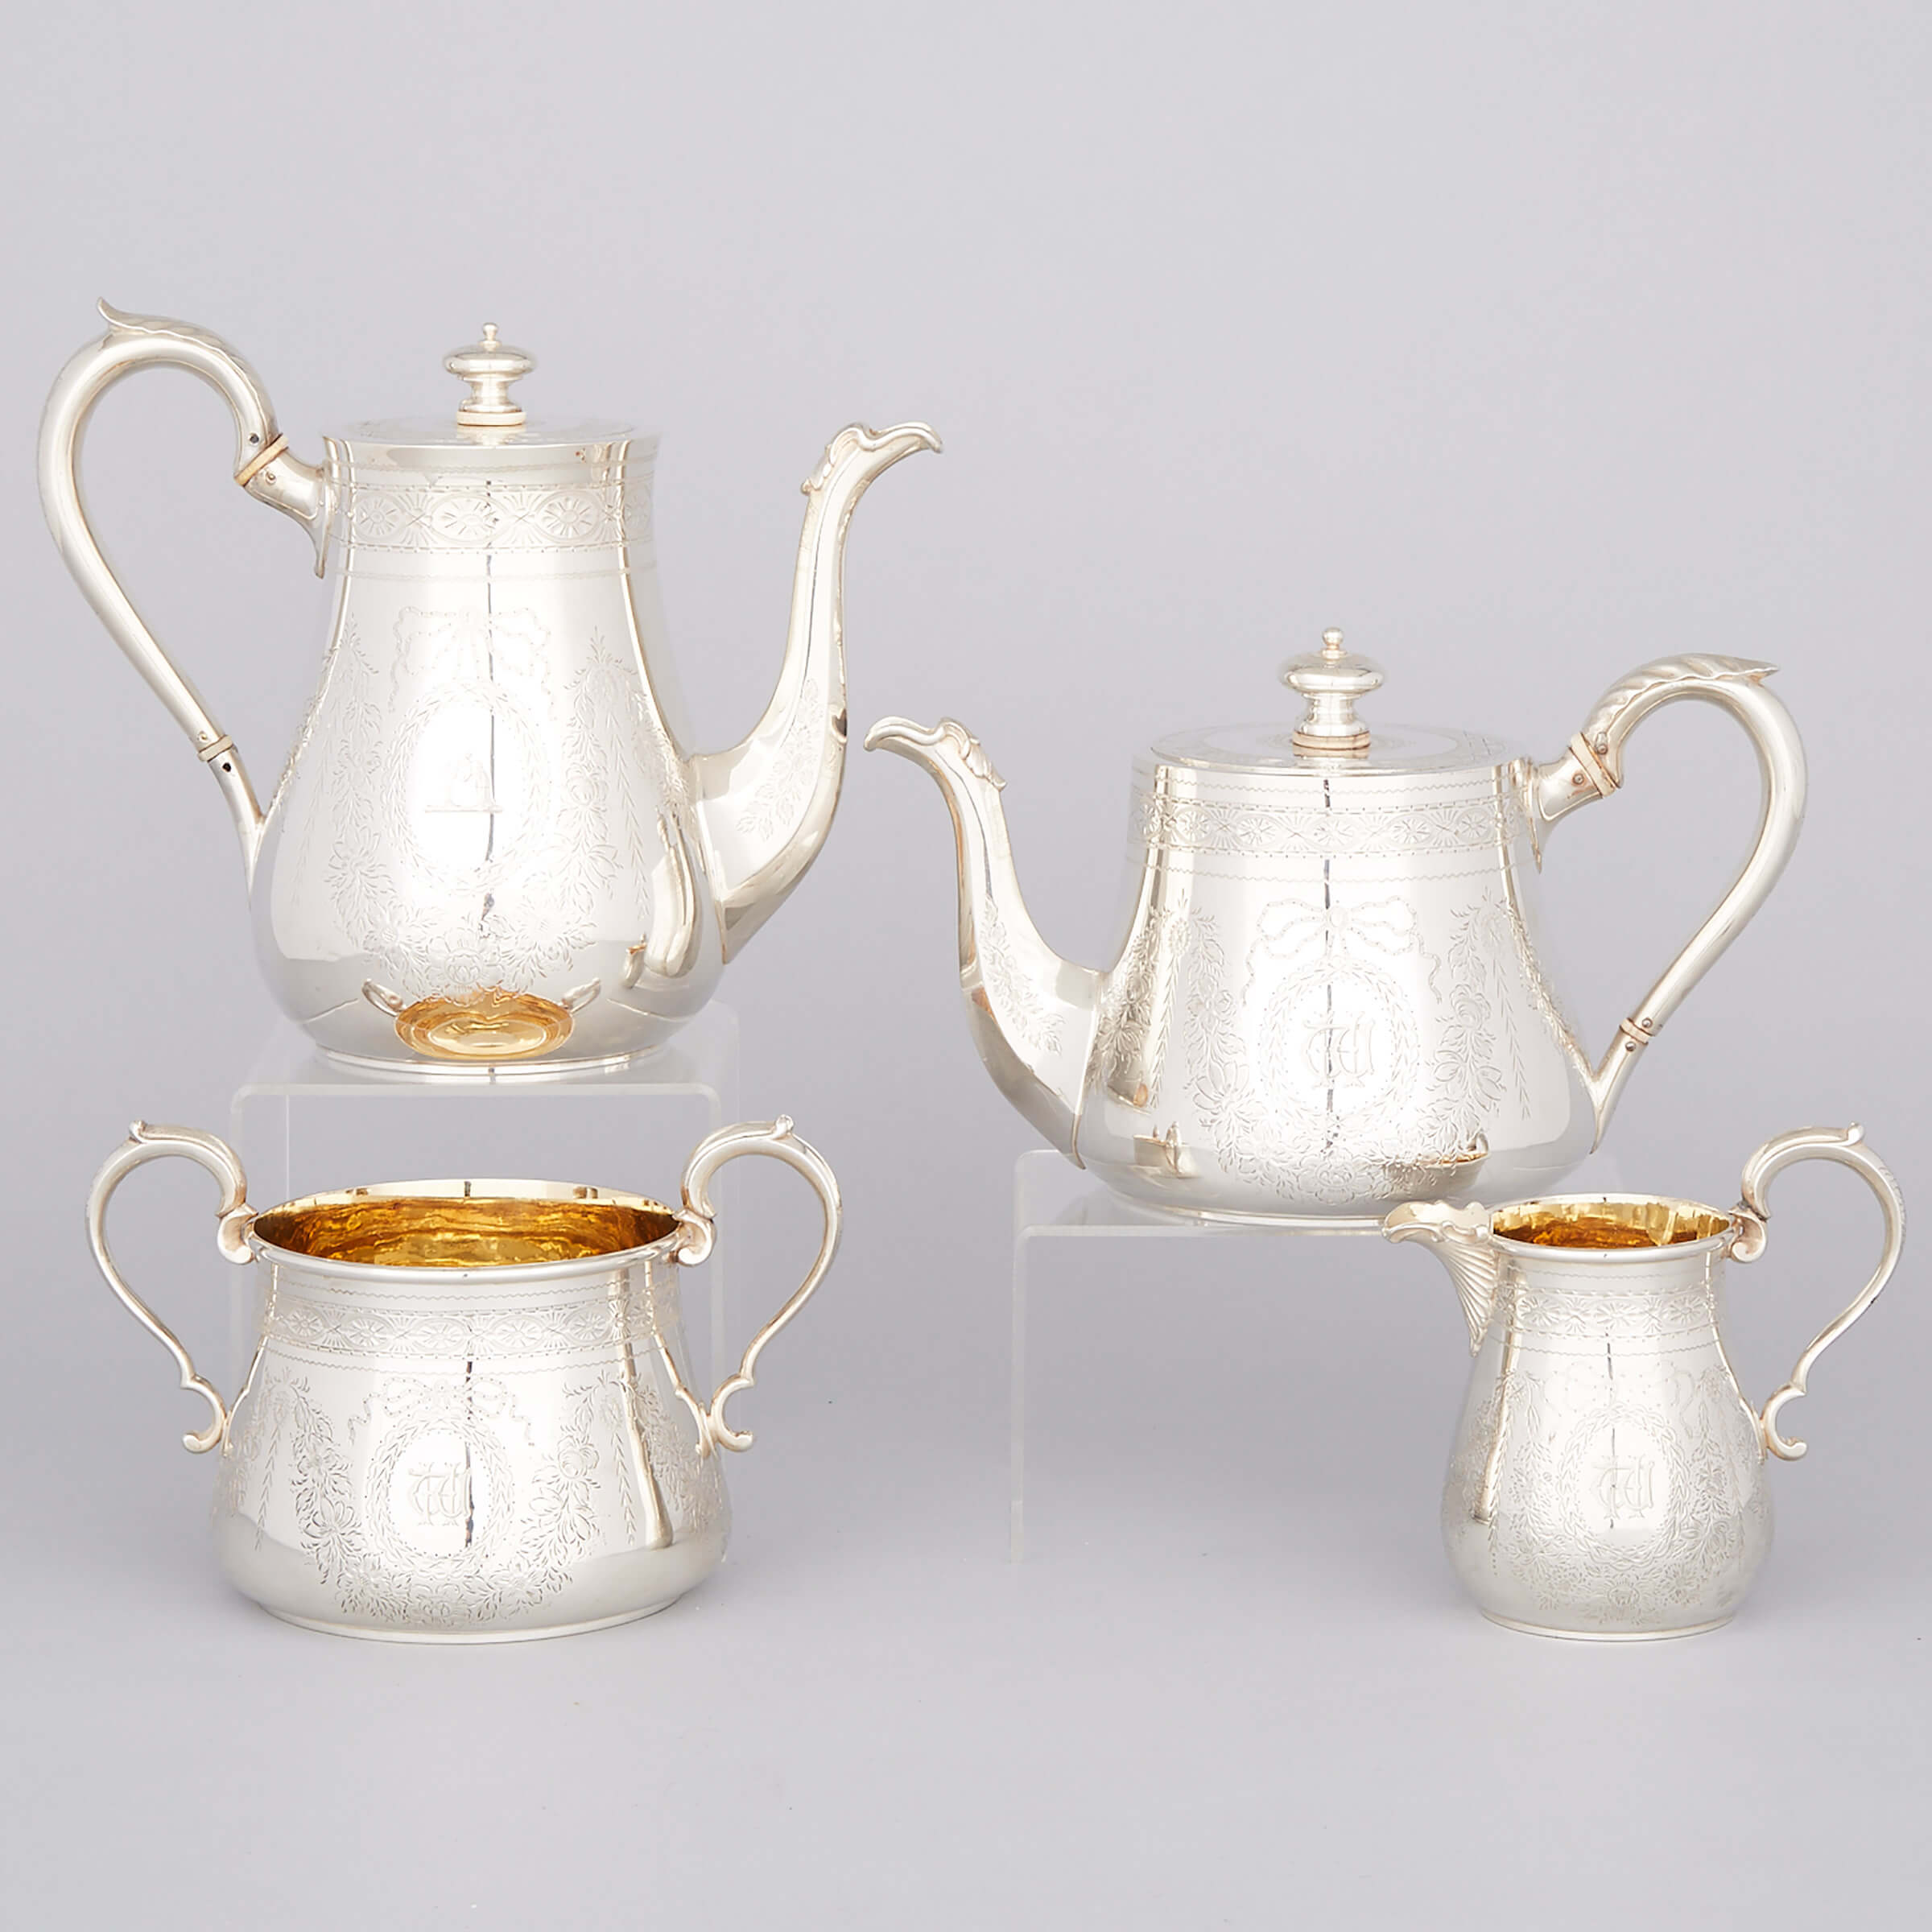 Victorian Silver Tea and Coffee Service, Charles Frederick Hancock, London, 1864-65